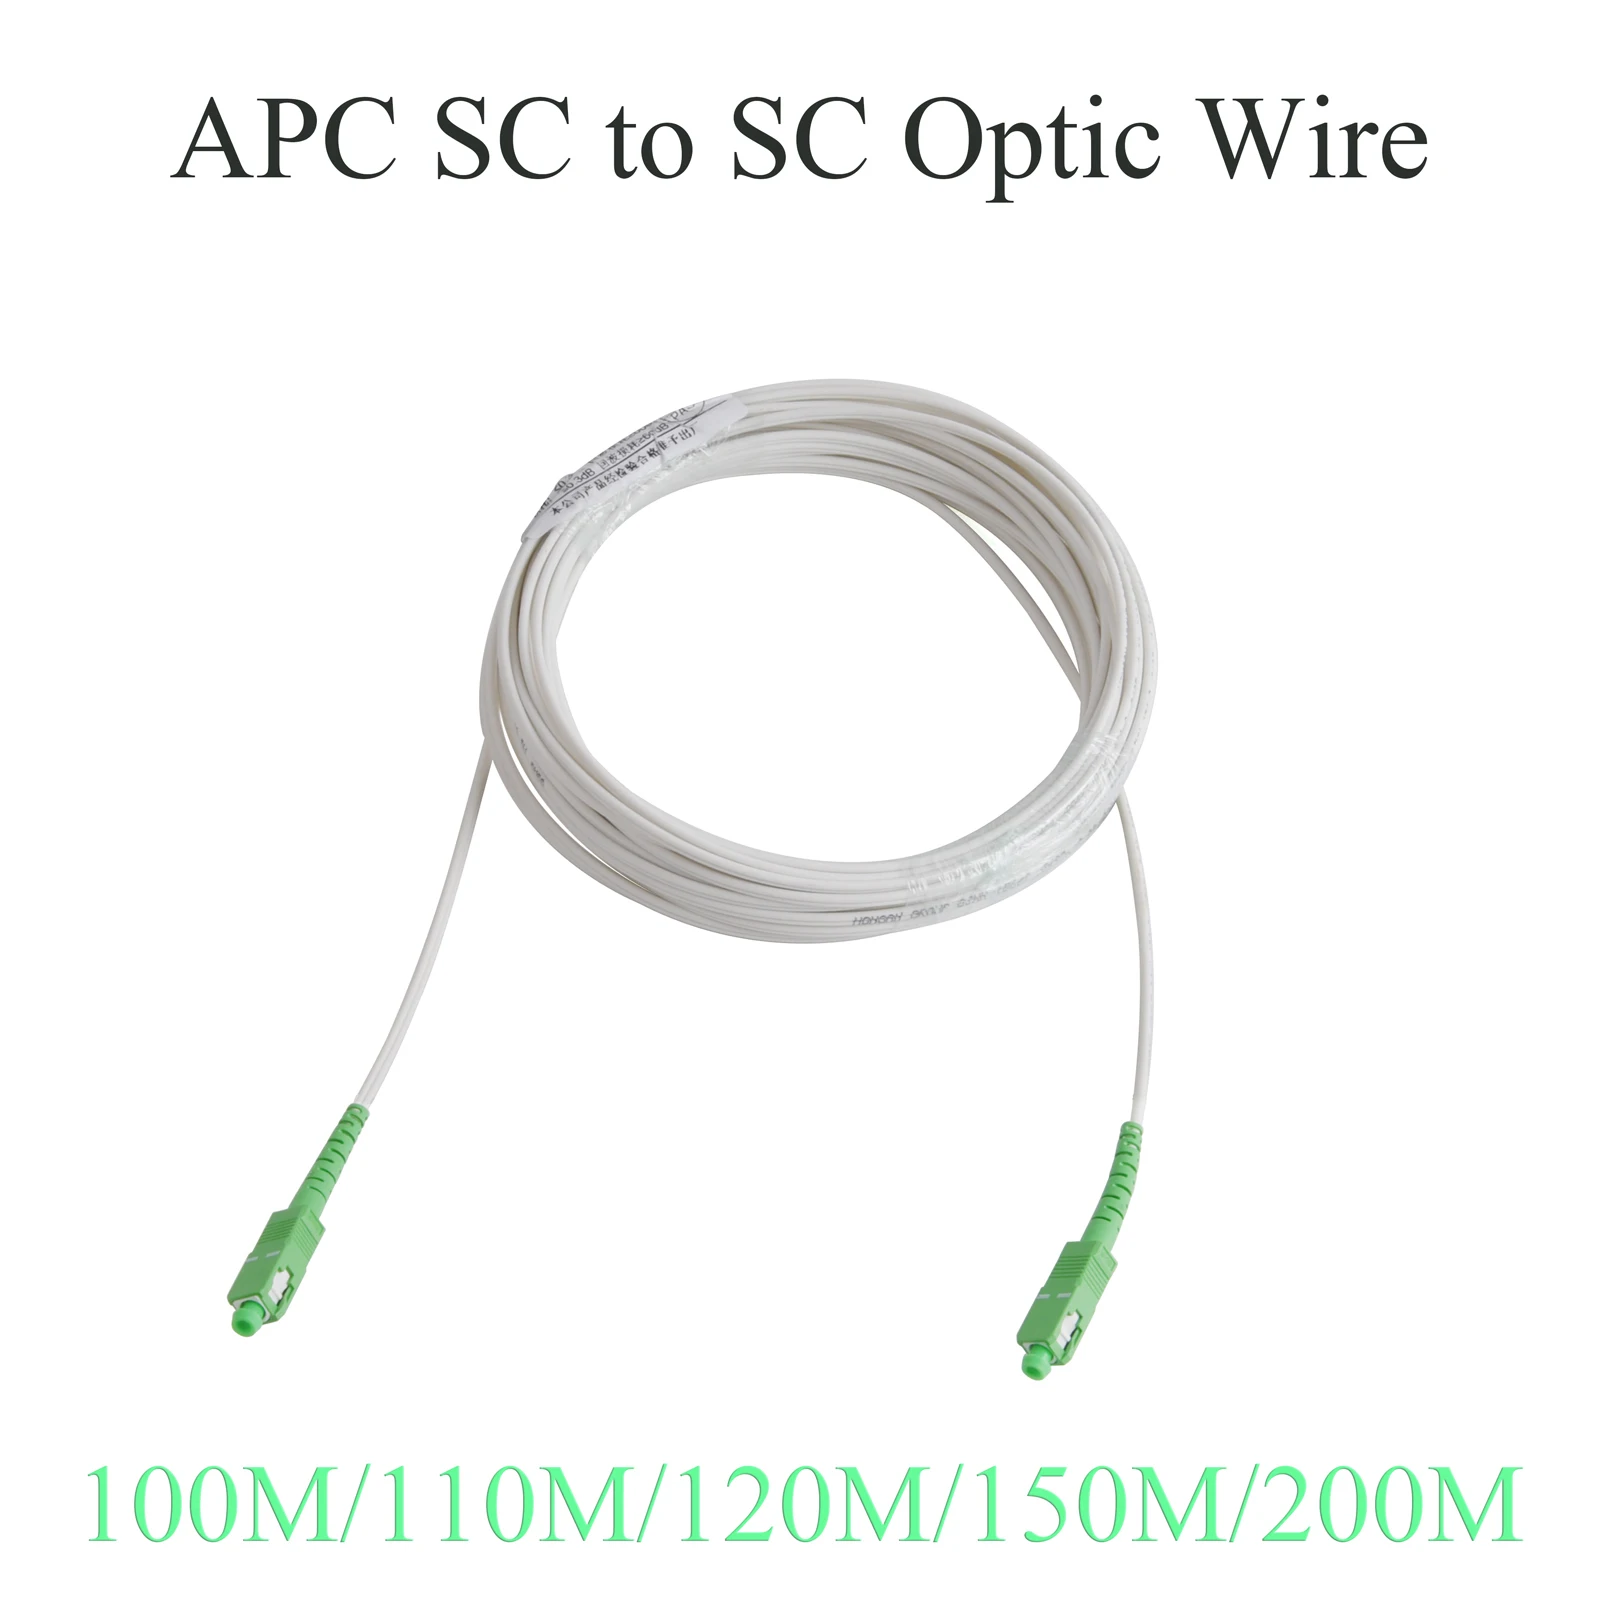 Fiber Optic Extension Wire APC SC to SC Single-mode Single-core Indoor Convert Patch Cord 100M/110M/120M/150M/200M Optical Cable